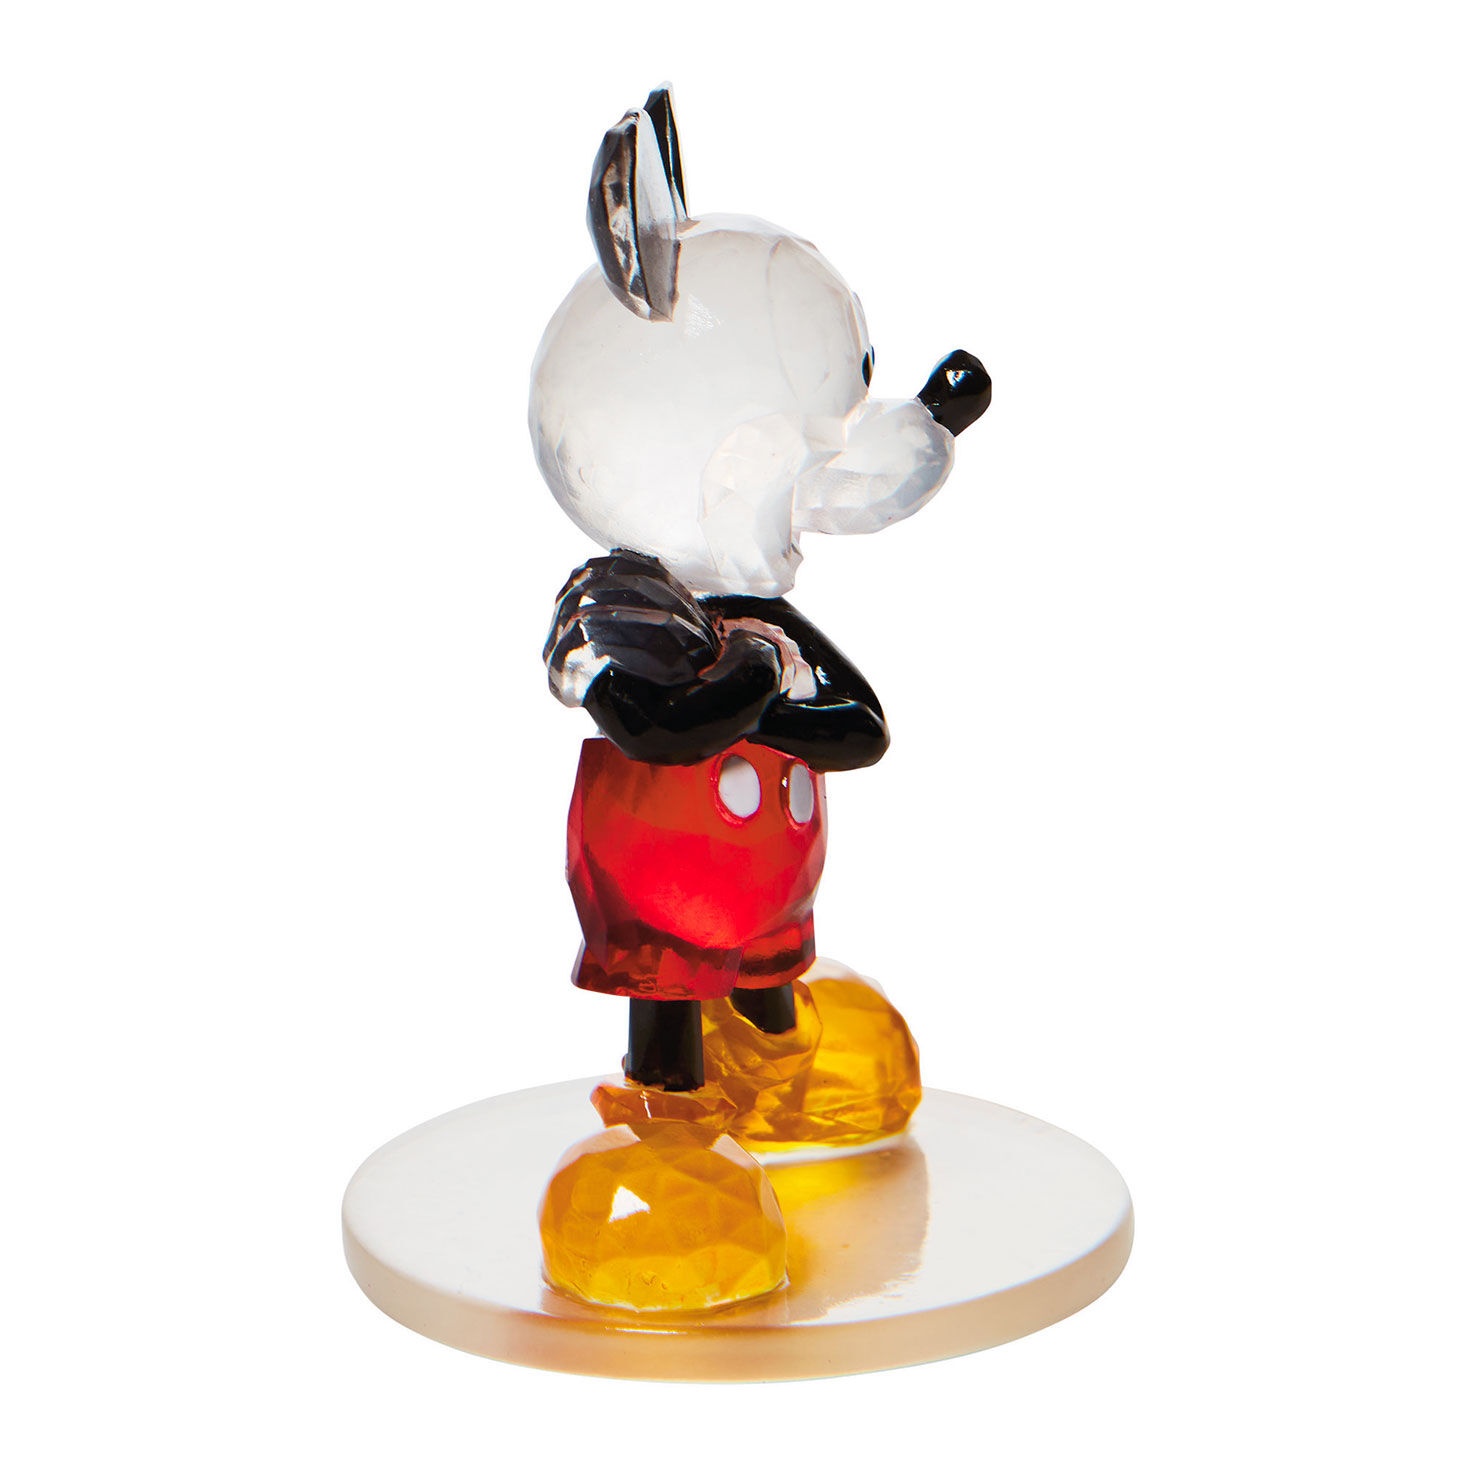 Disney Mickey Mouse Facets Mini Figurine, 3.75